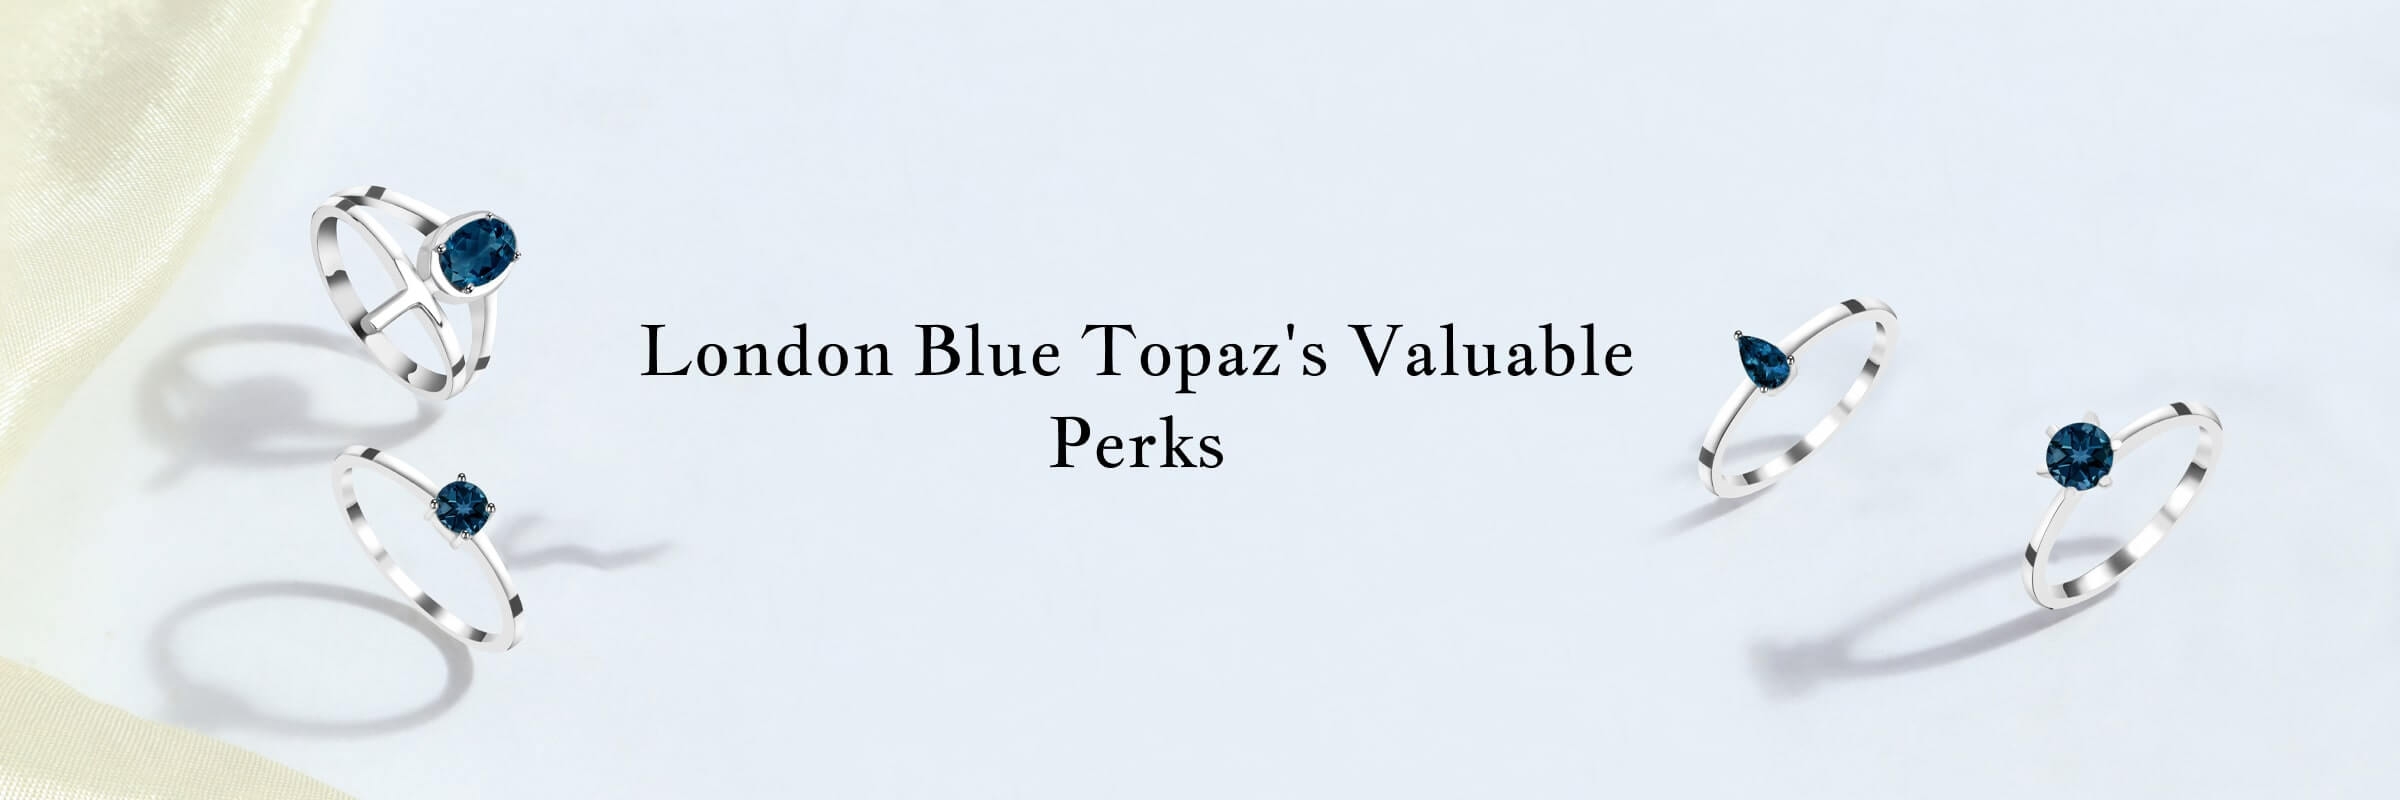 London Blue Topaz Benefits